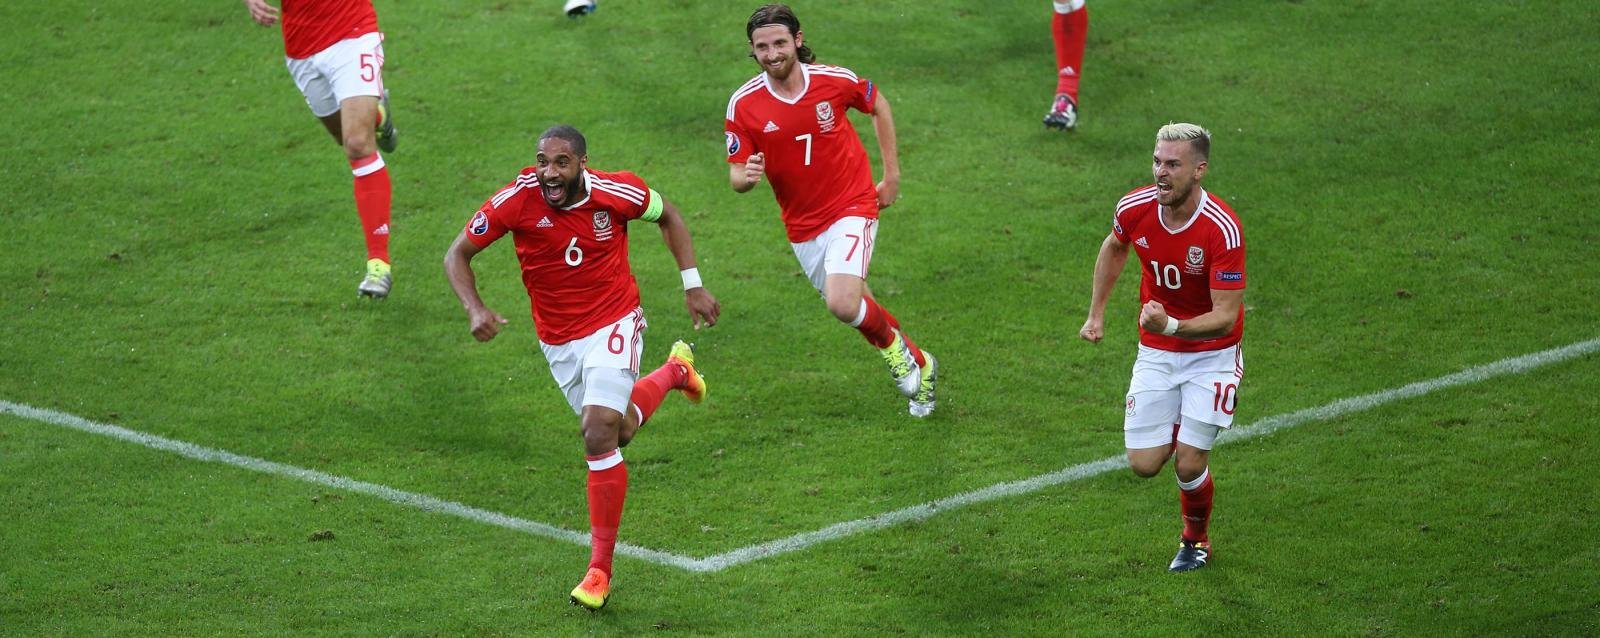 Wales 3-1 Belgium: EURO 2016 Quarter-Final Report